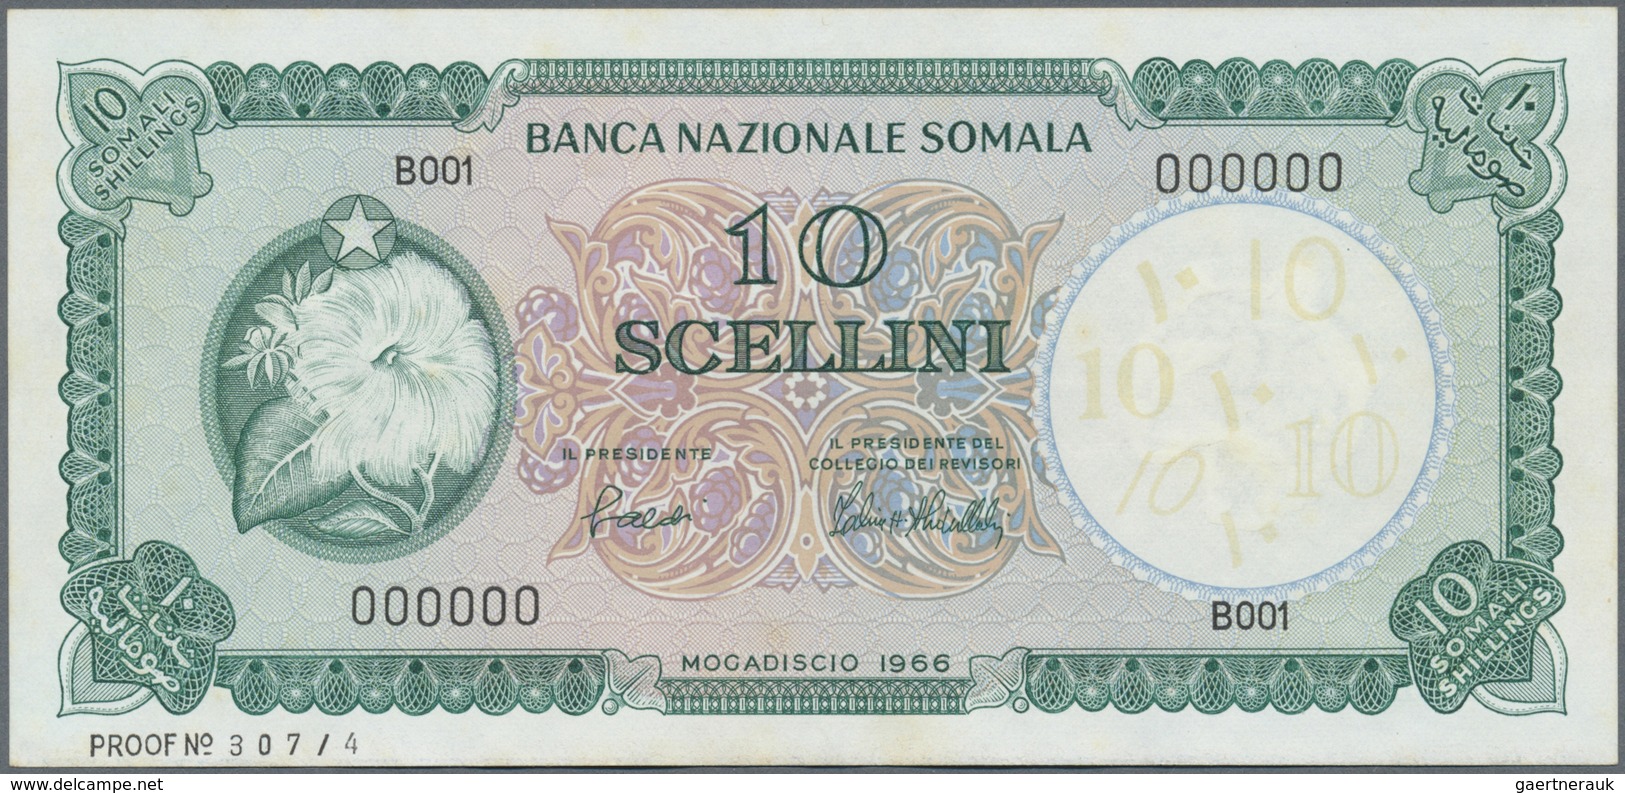 Somalia: Banca Nazionale Somala 10 Scellini 1966 SPECIMEN, P.6s With A Few Tiny Spots Along The Bord - Somalie